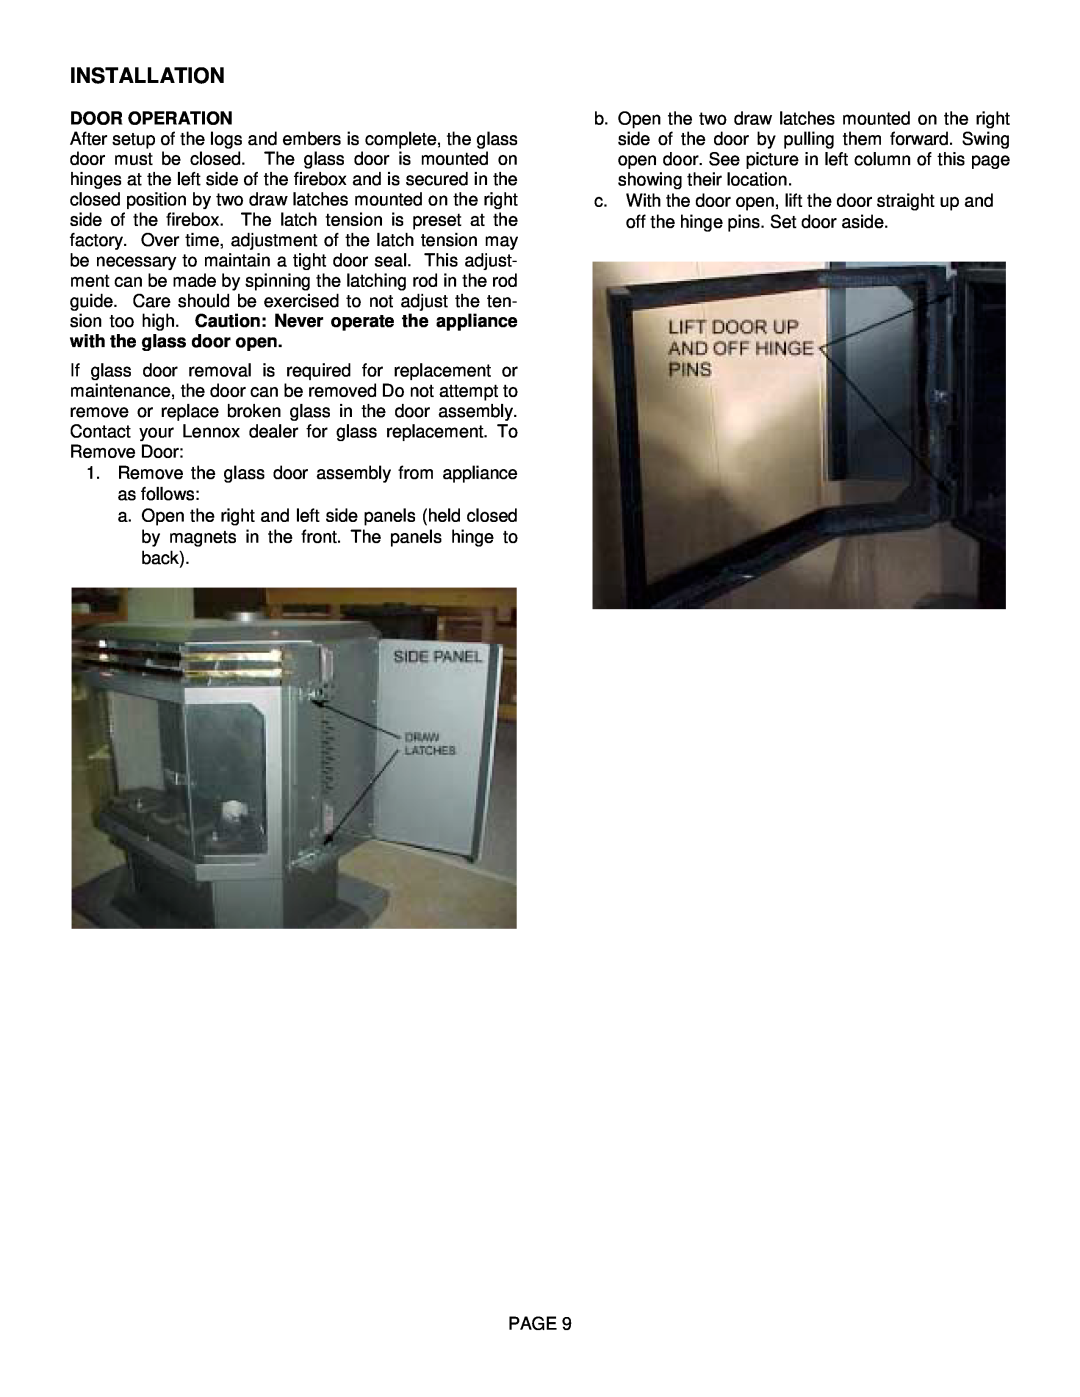 Lenoxx Electronics L30 BF-2 operation manual Door Operation, Installation 